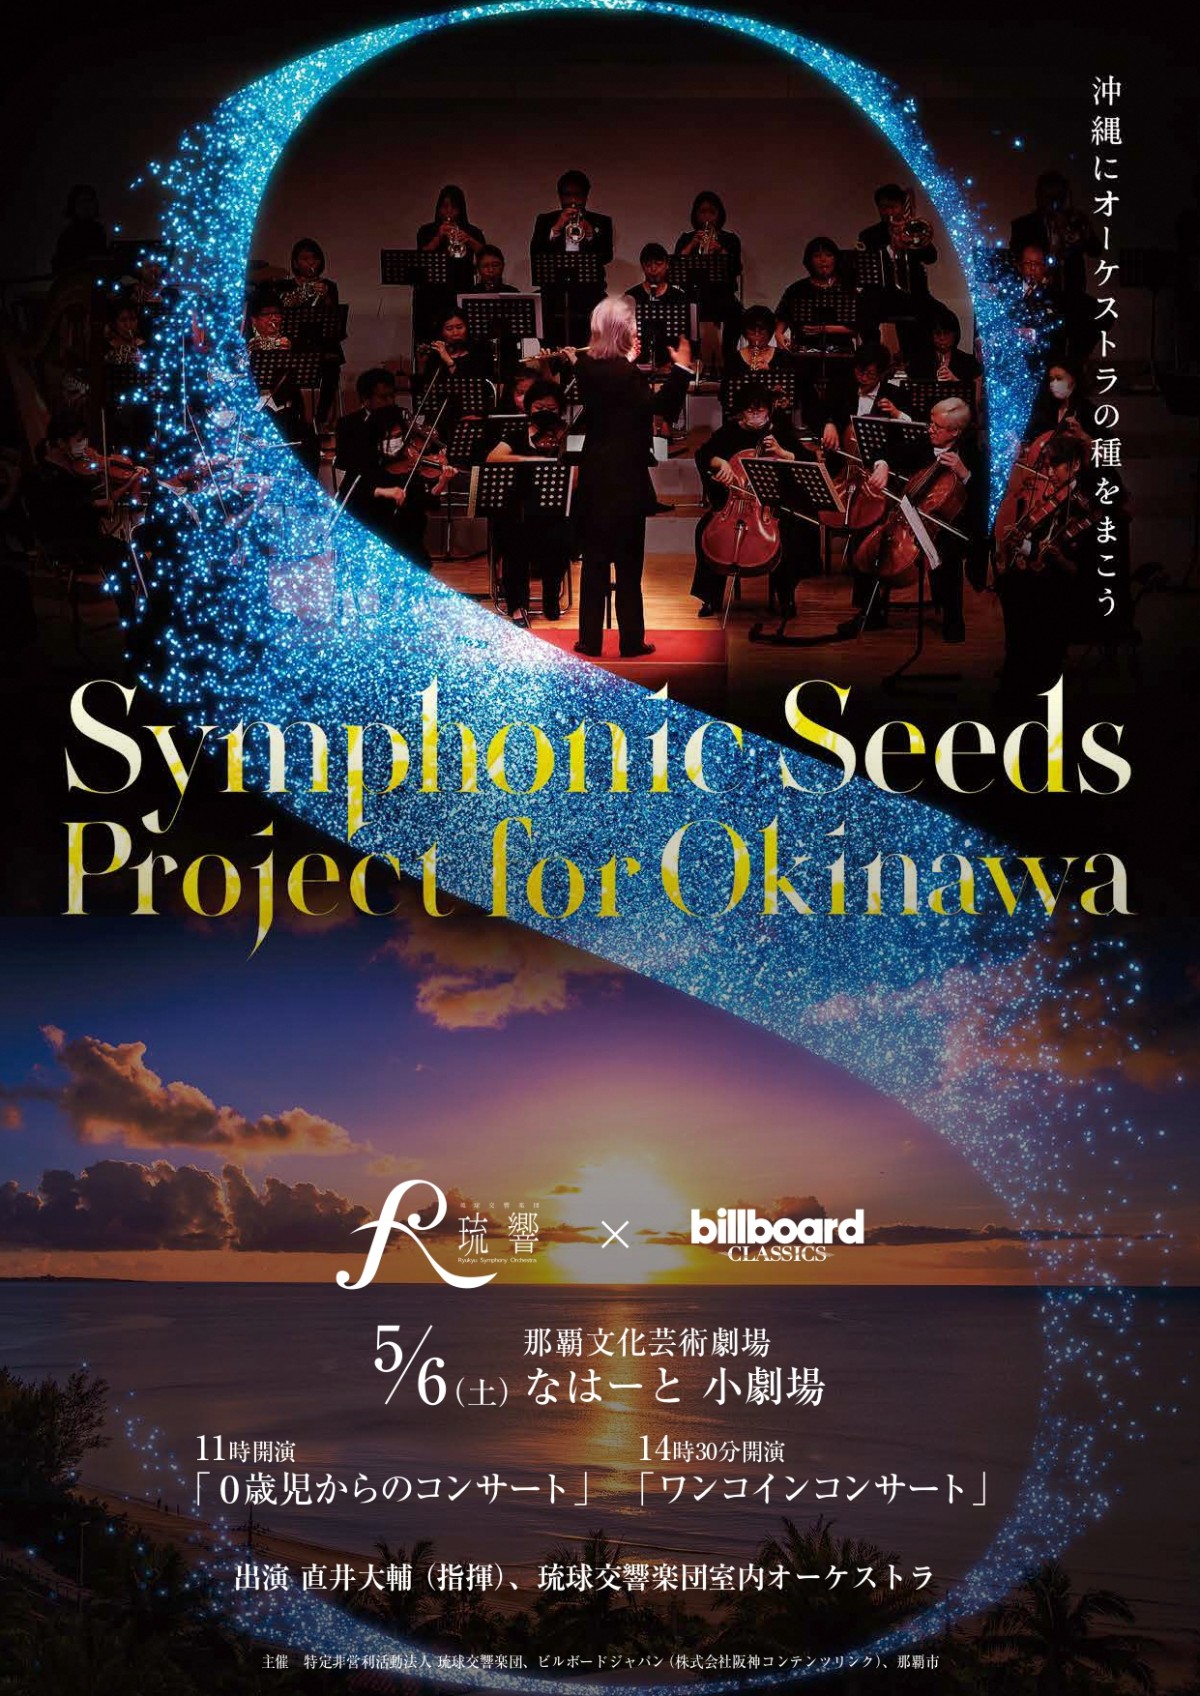 Symphonic Seeds Project for Okinawa「琉球交響楽団とビルボードクラシックスがお届けするふたつのコンサート」